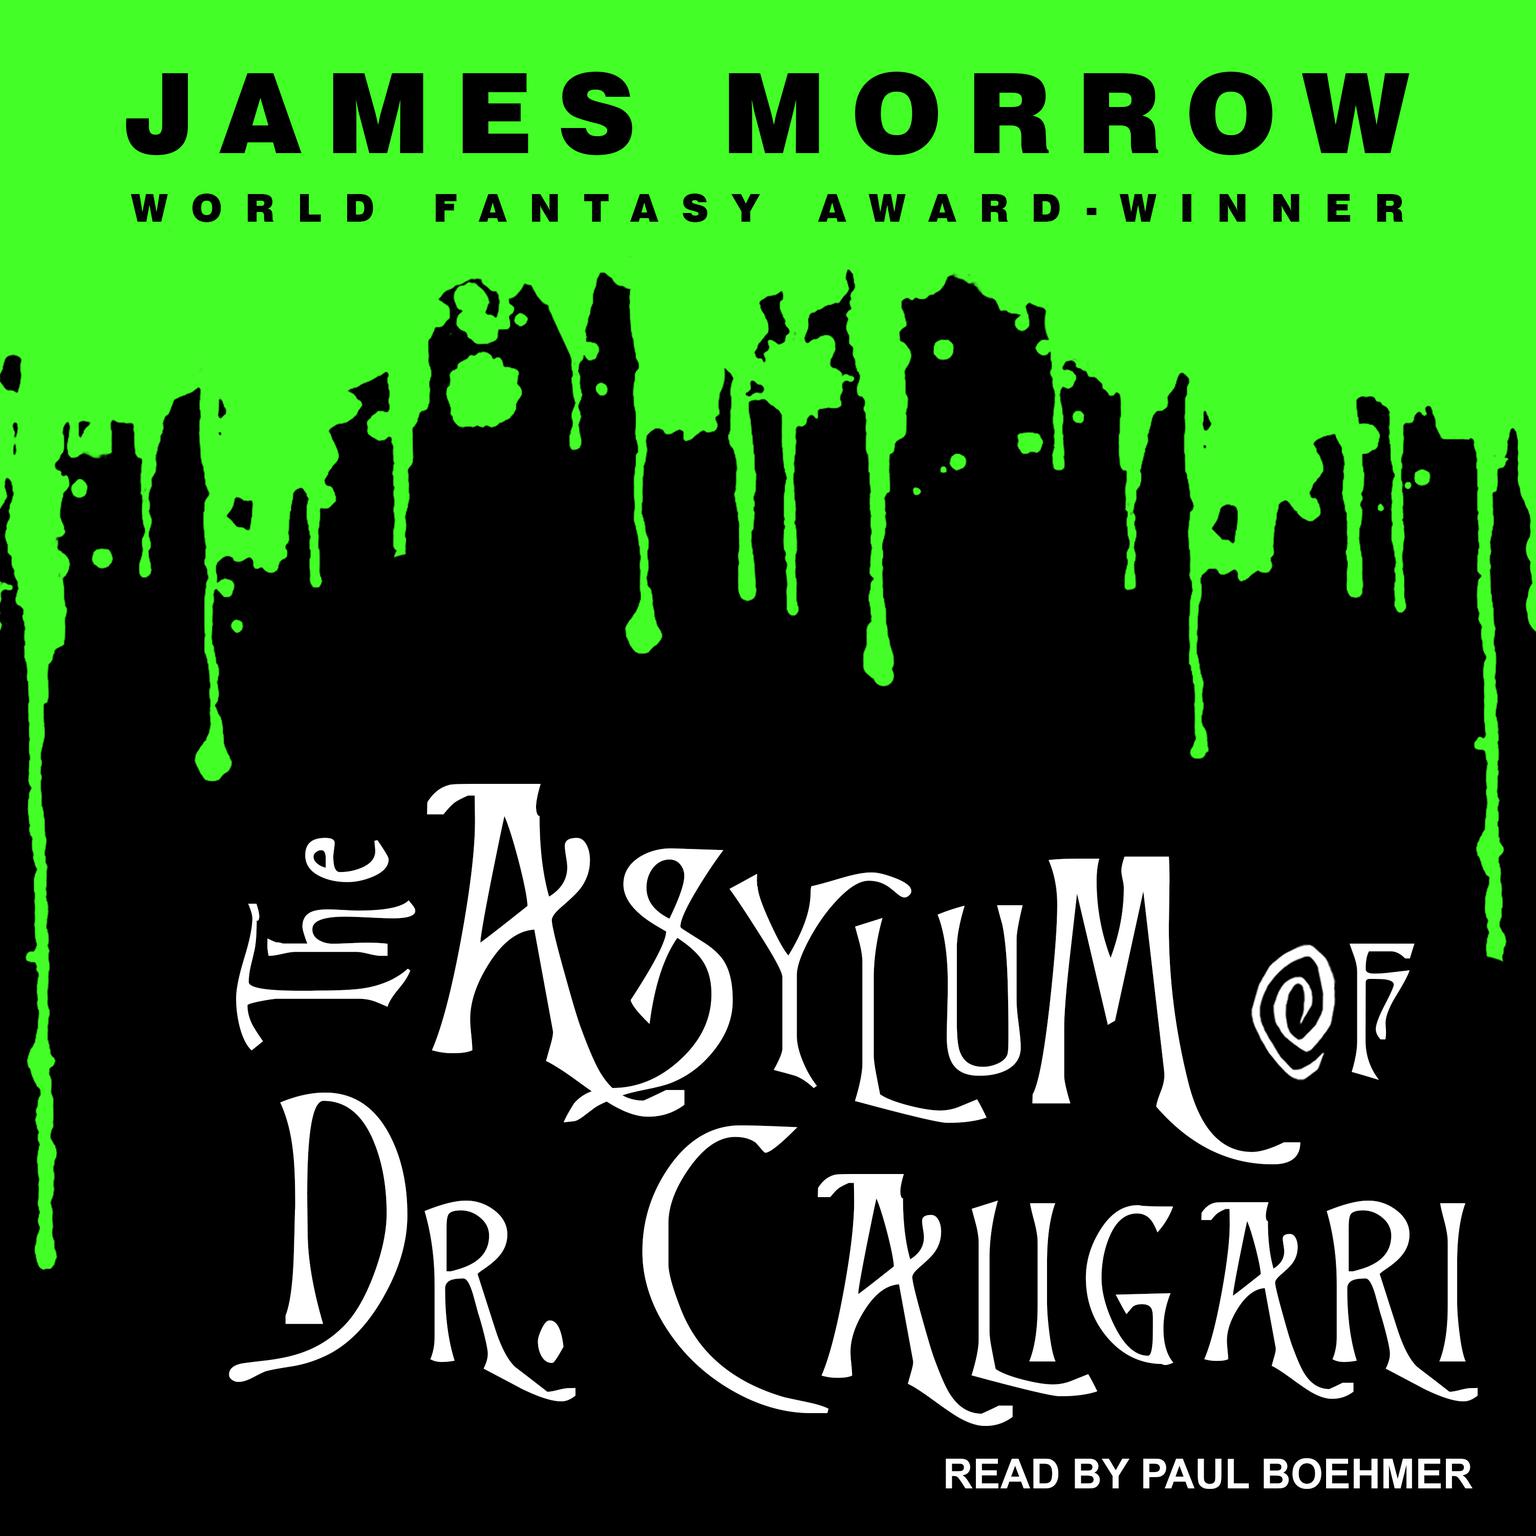 The Asylum of Dr. Caligari Audiobook, by James Morrow